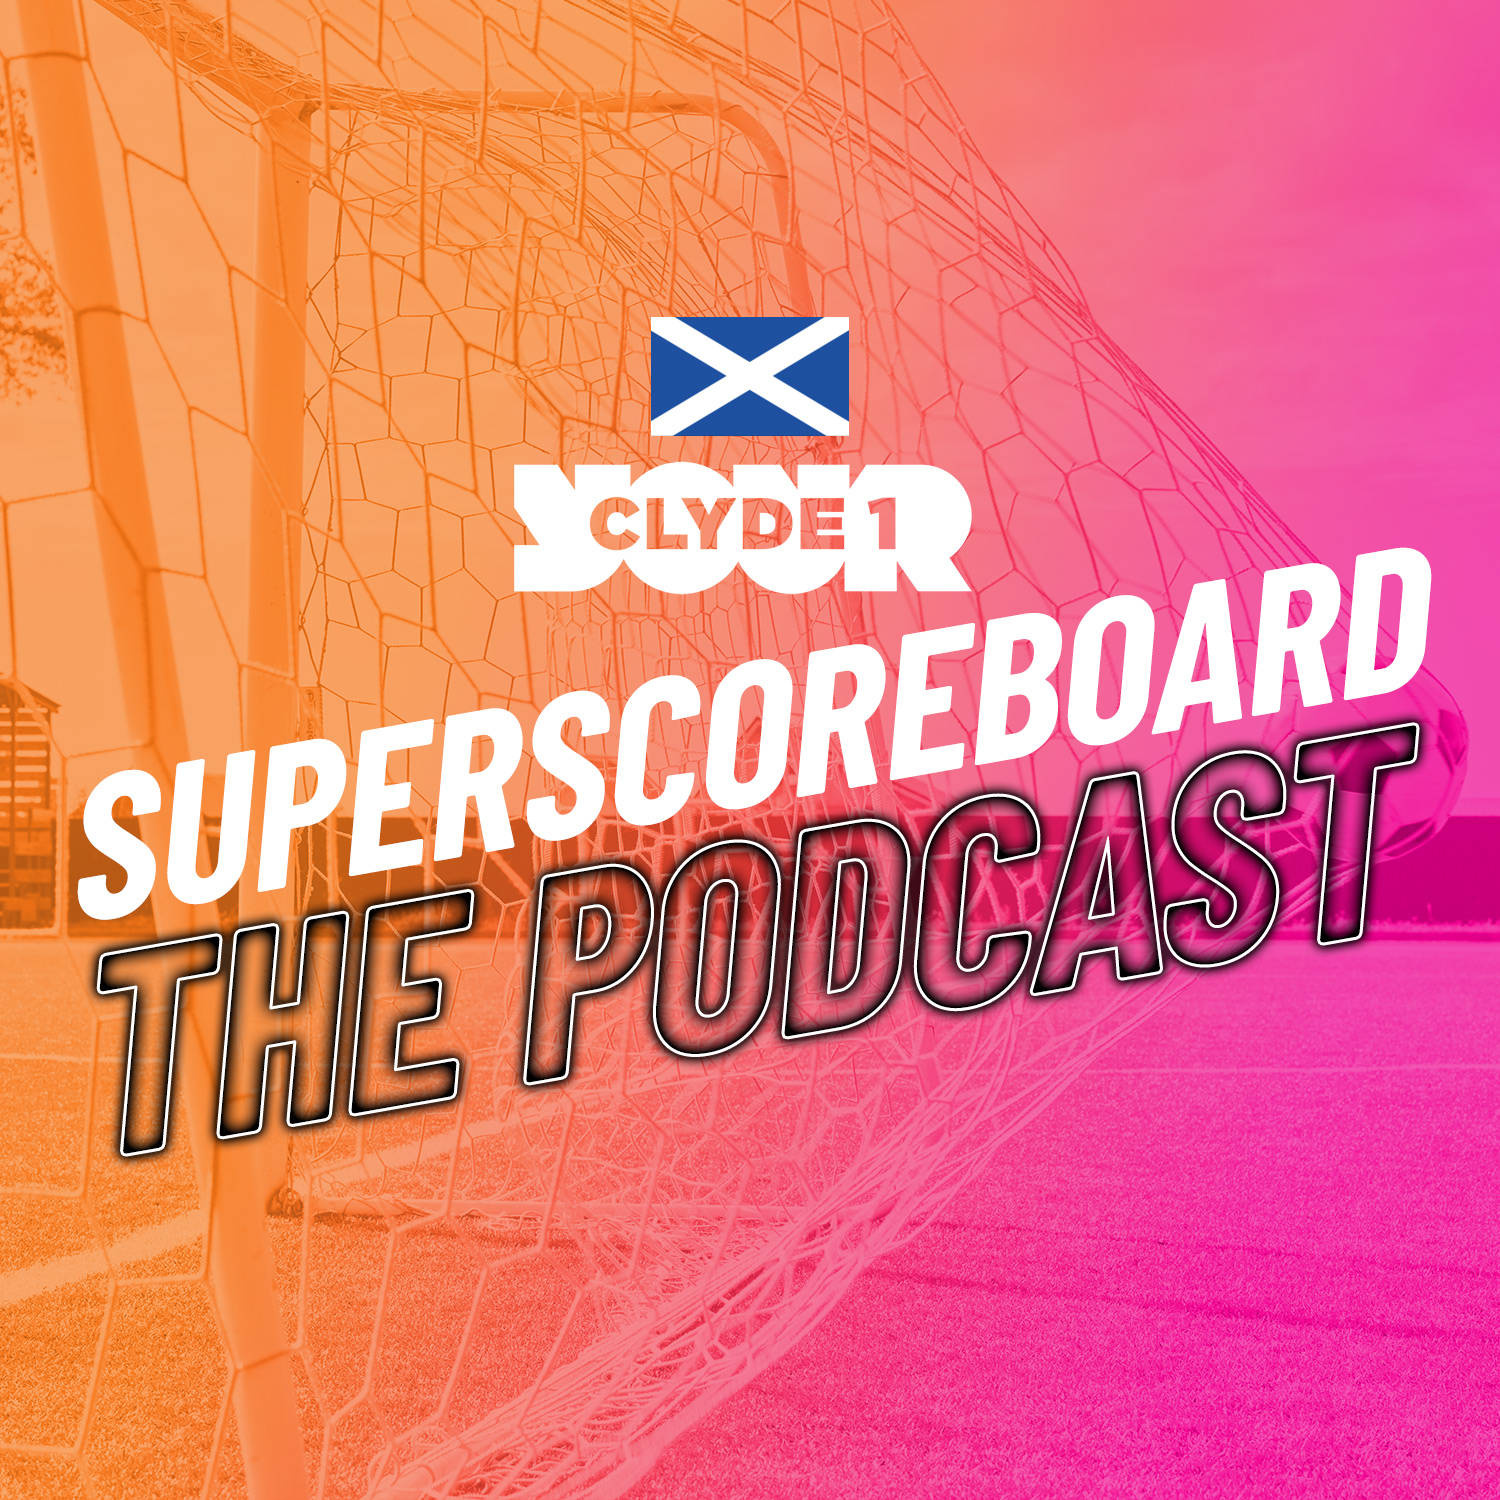 Thursday 7th March Clyde 1 Superscoreboard